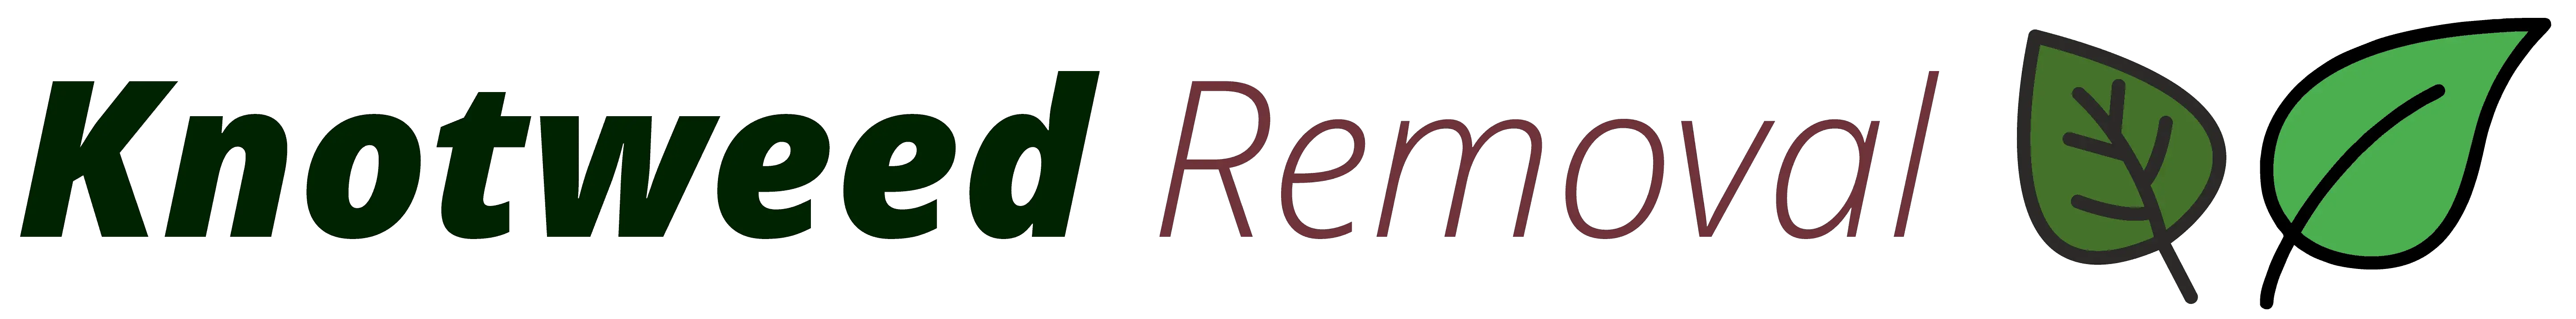 Knotweed Removal main Website Logo